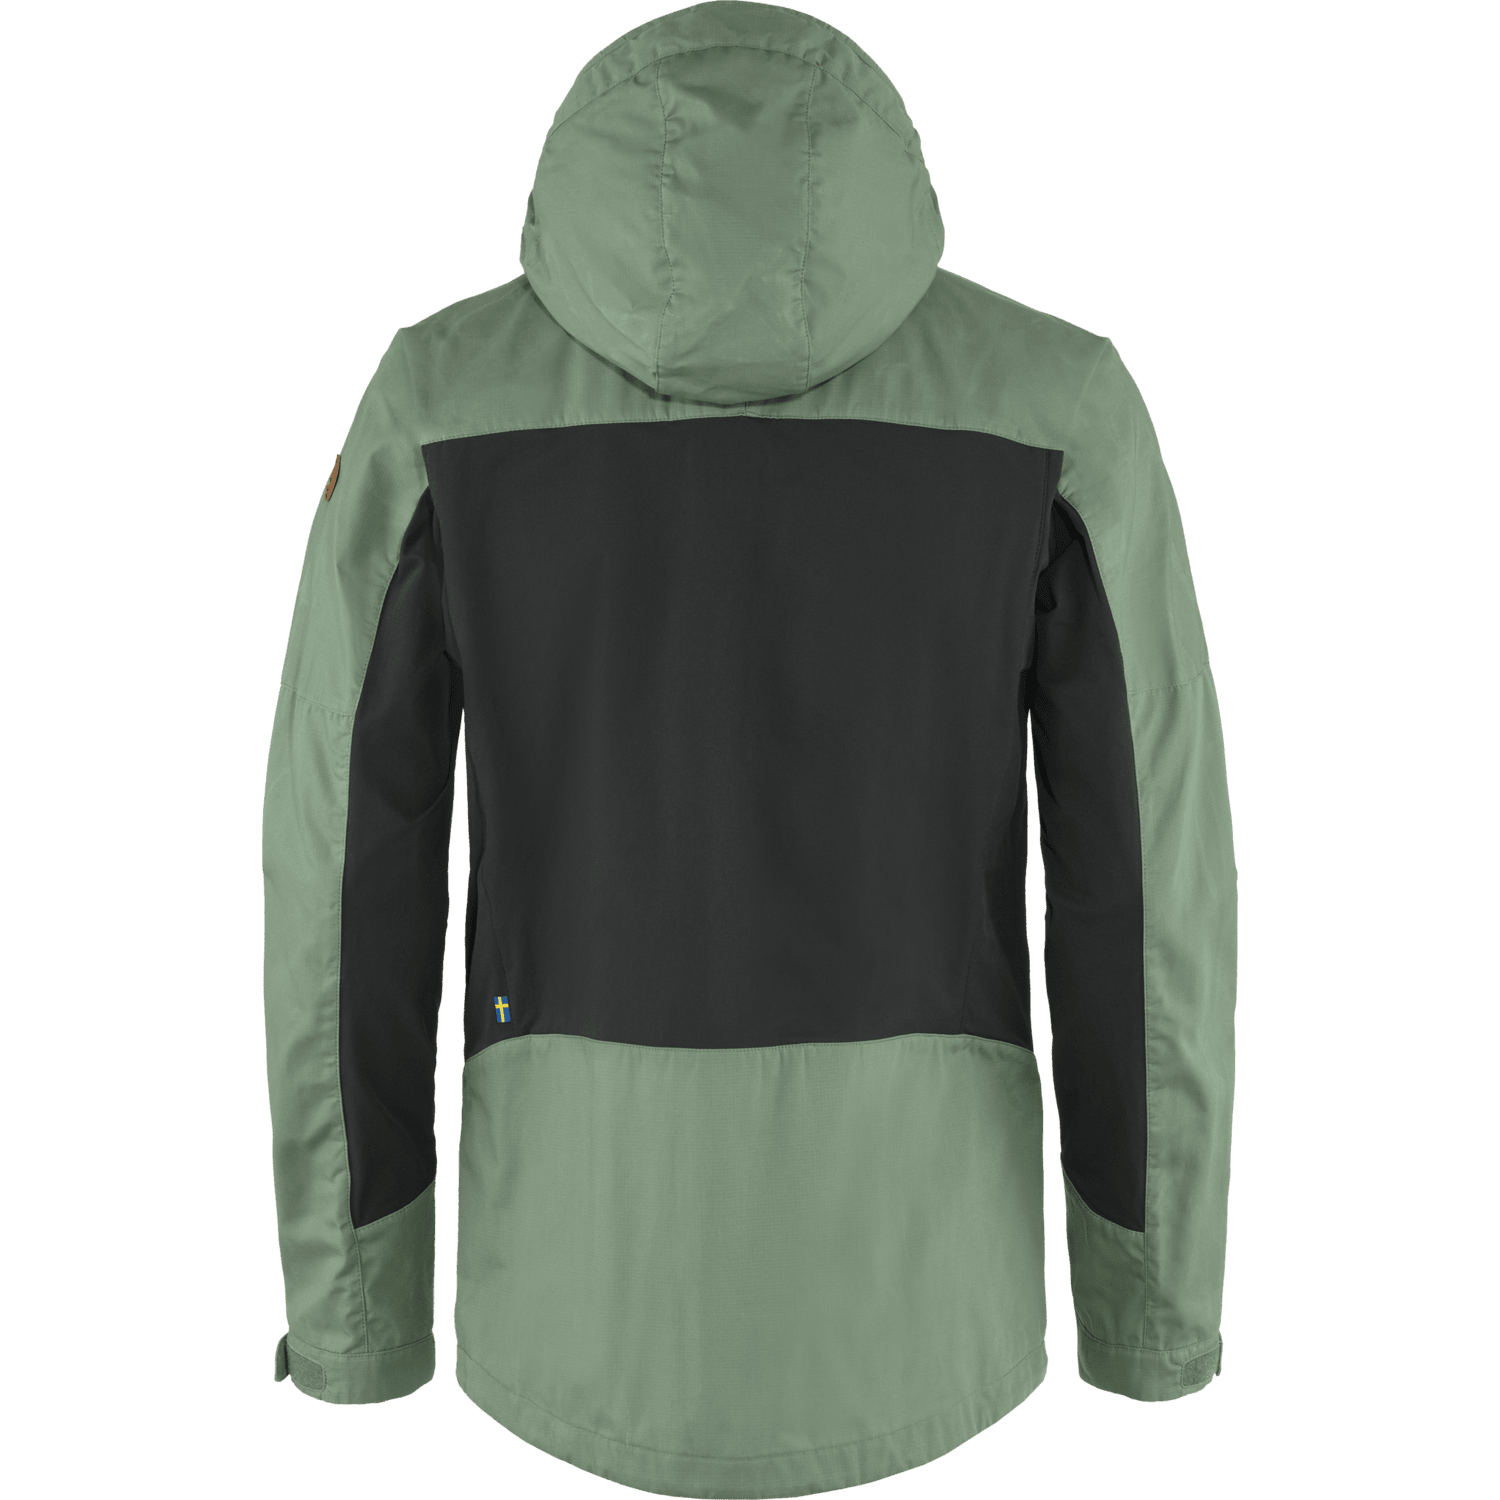 Fjällräven M's Abisko Lite Trekking Jacket - G-1000® Lite Eco - Recycled PET & Organic cotton Patina Green-Dark Grey Jacket